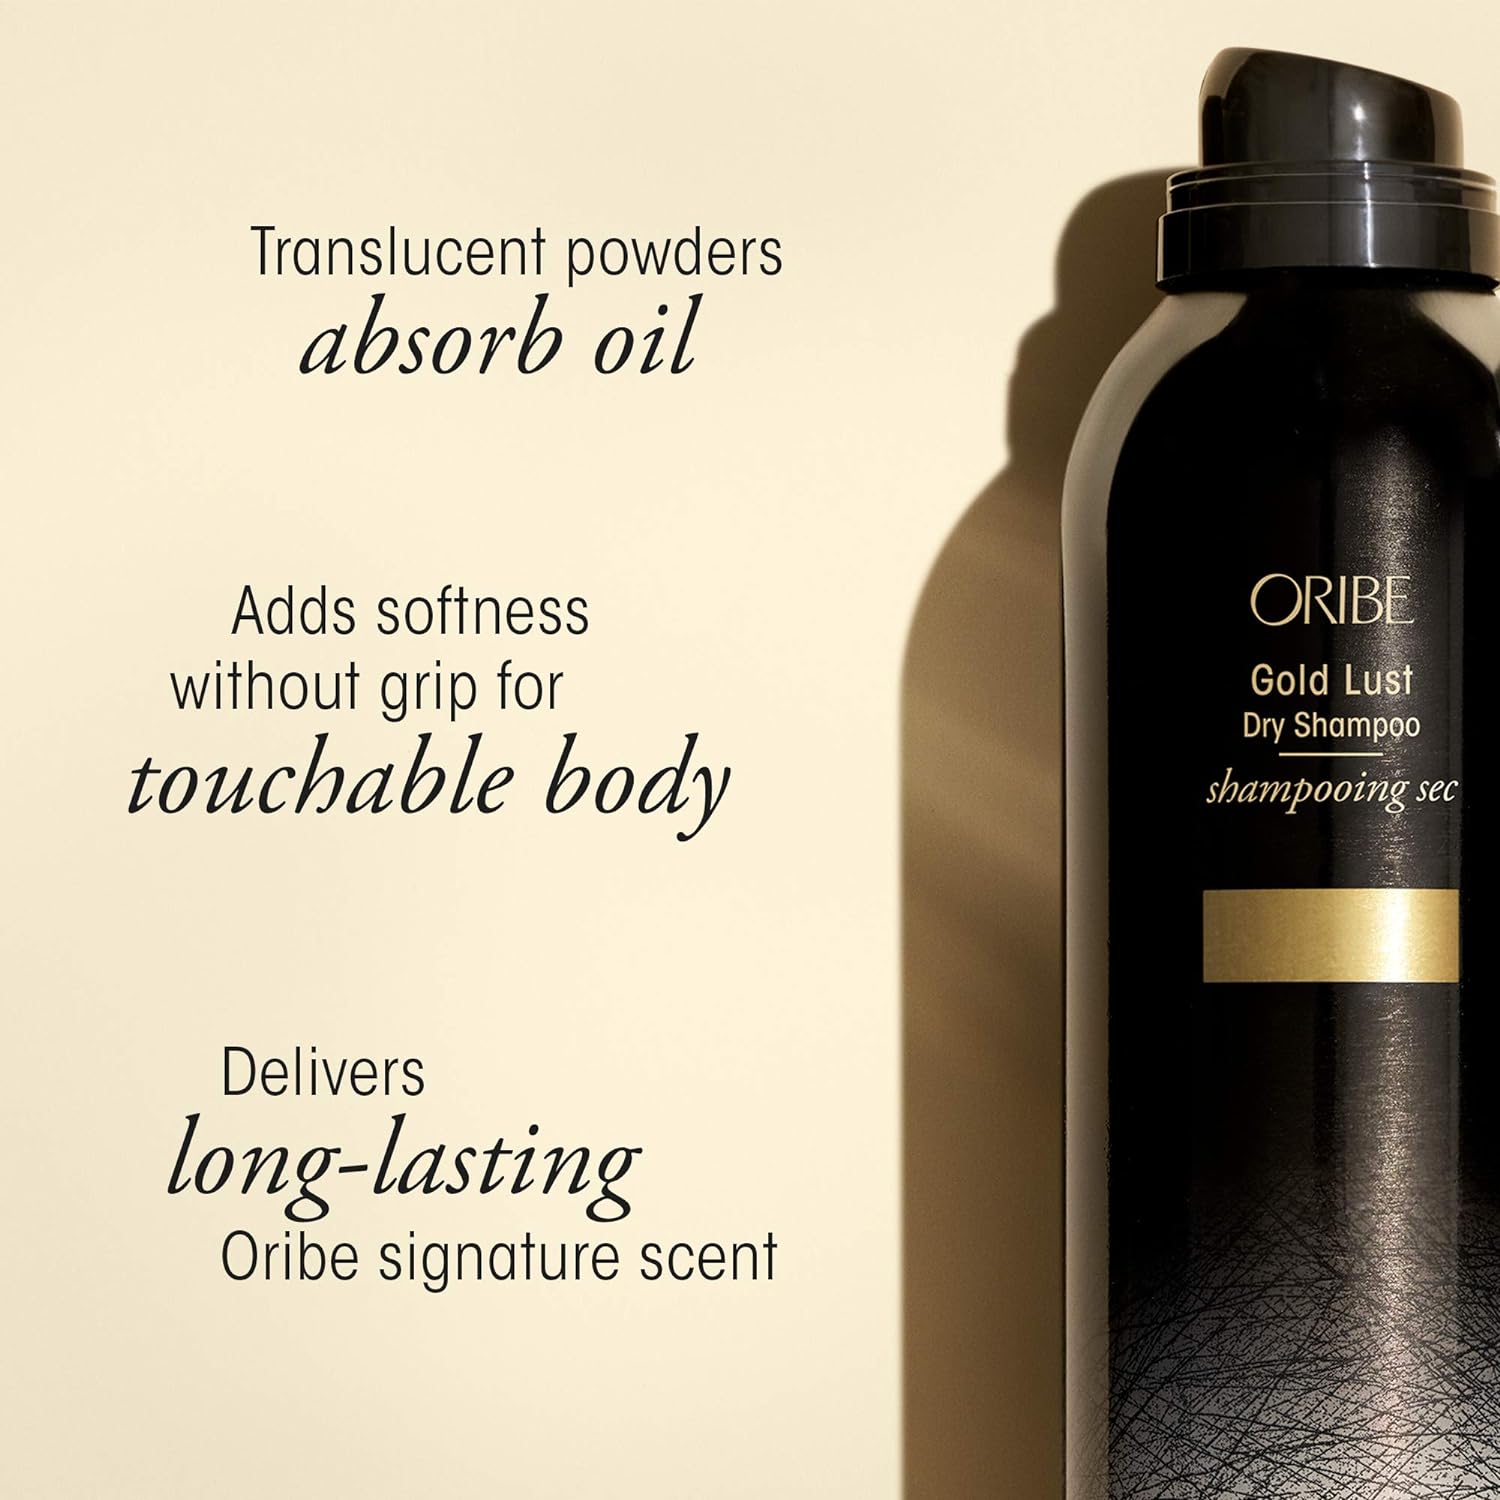 Oribe Gold Lust Dry Shampoo, 8.5 Fl Oz : Beauty & Personal Care